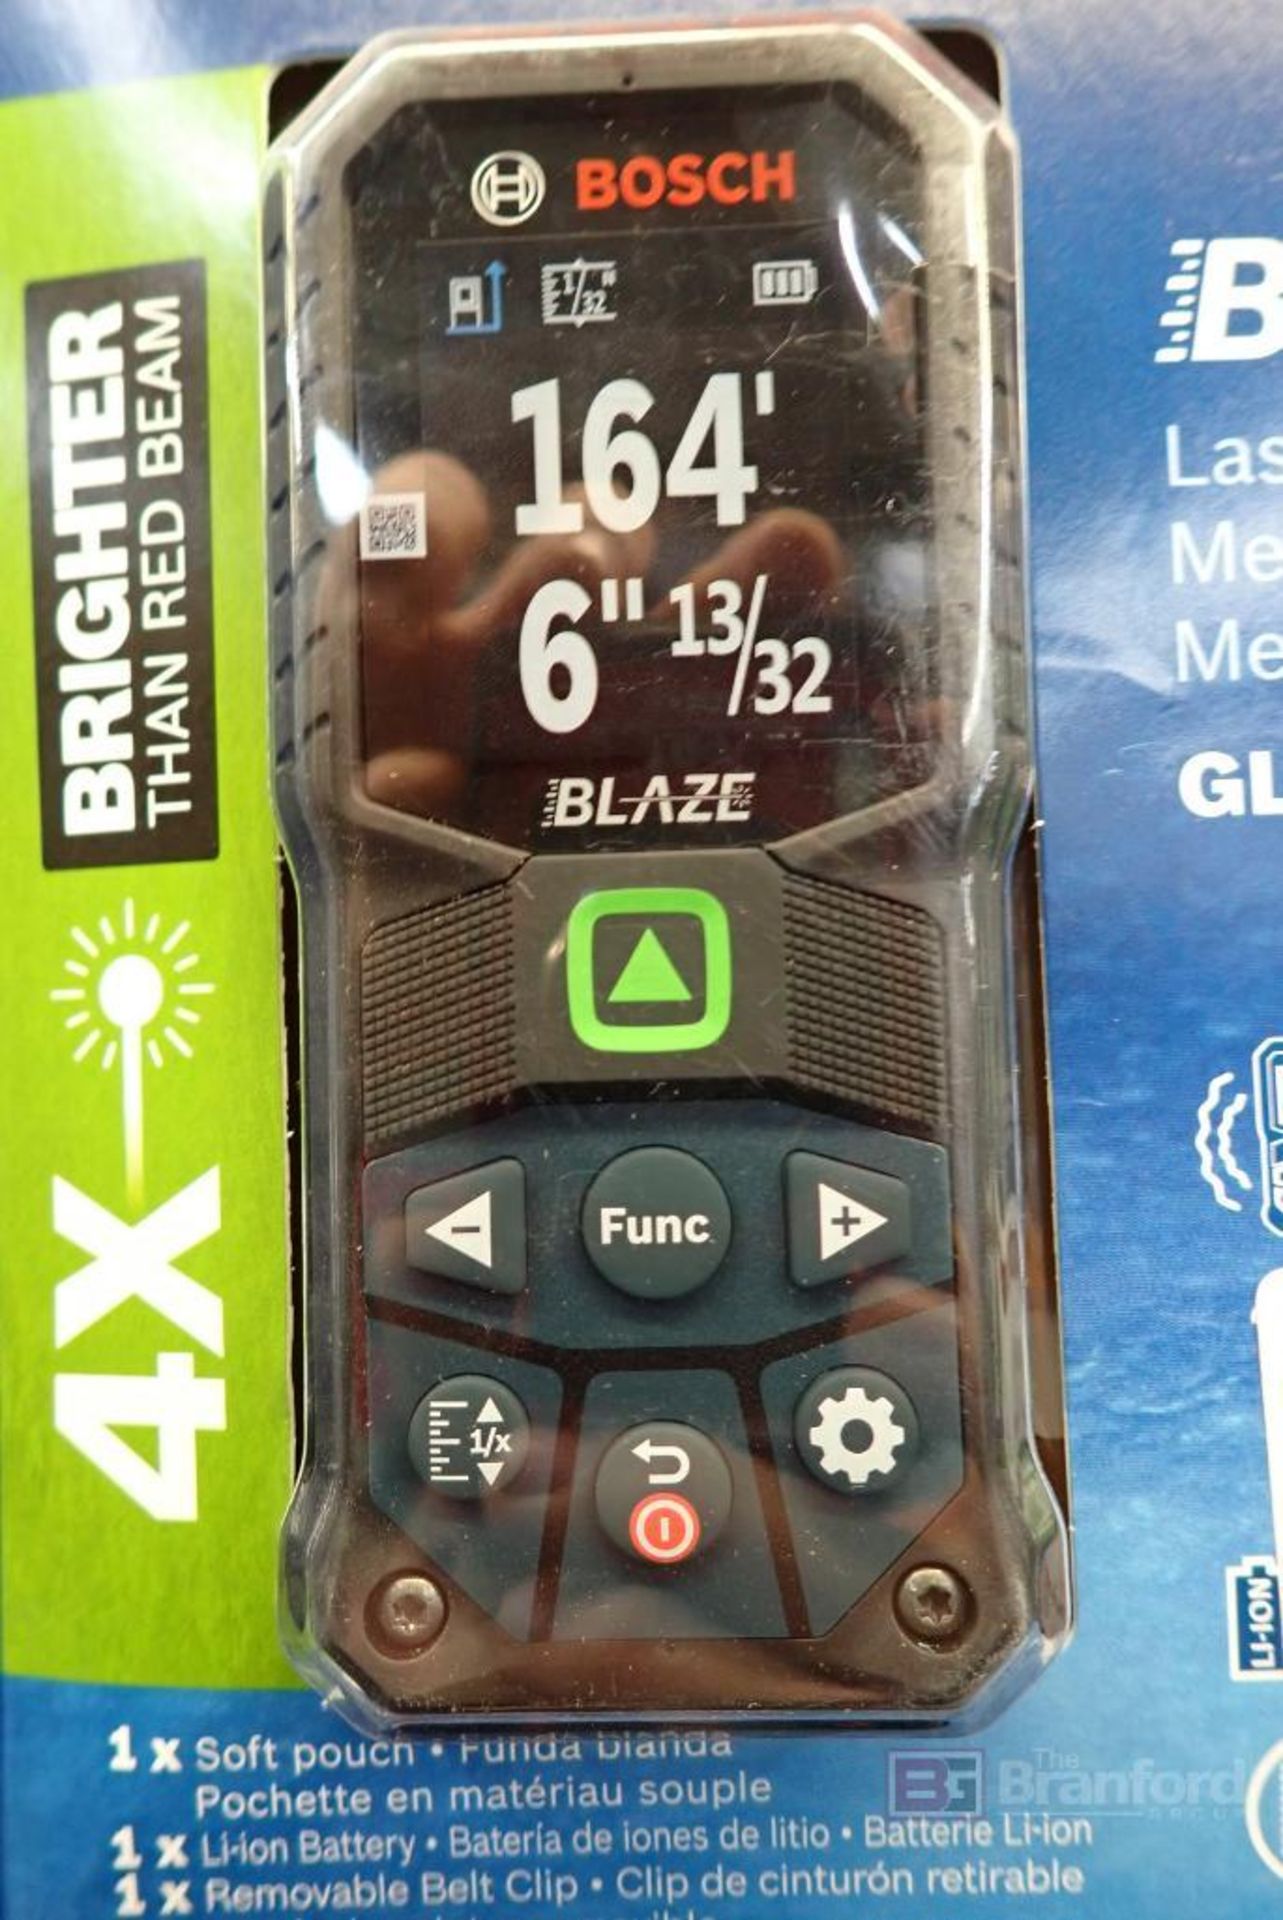 Bosch GLM165-27CGL Blaze 165' Laser Measure - Image 3 of 4